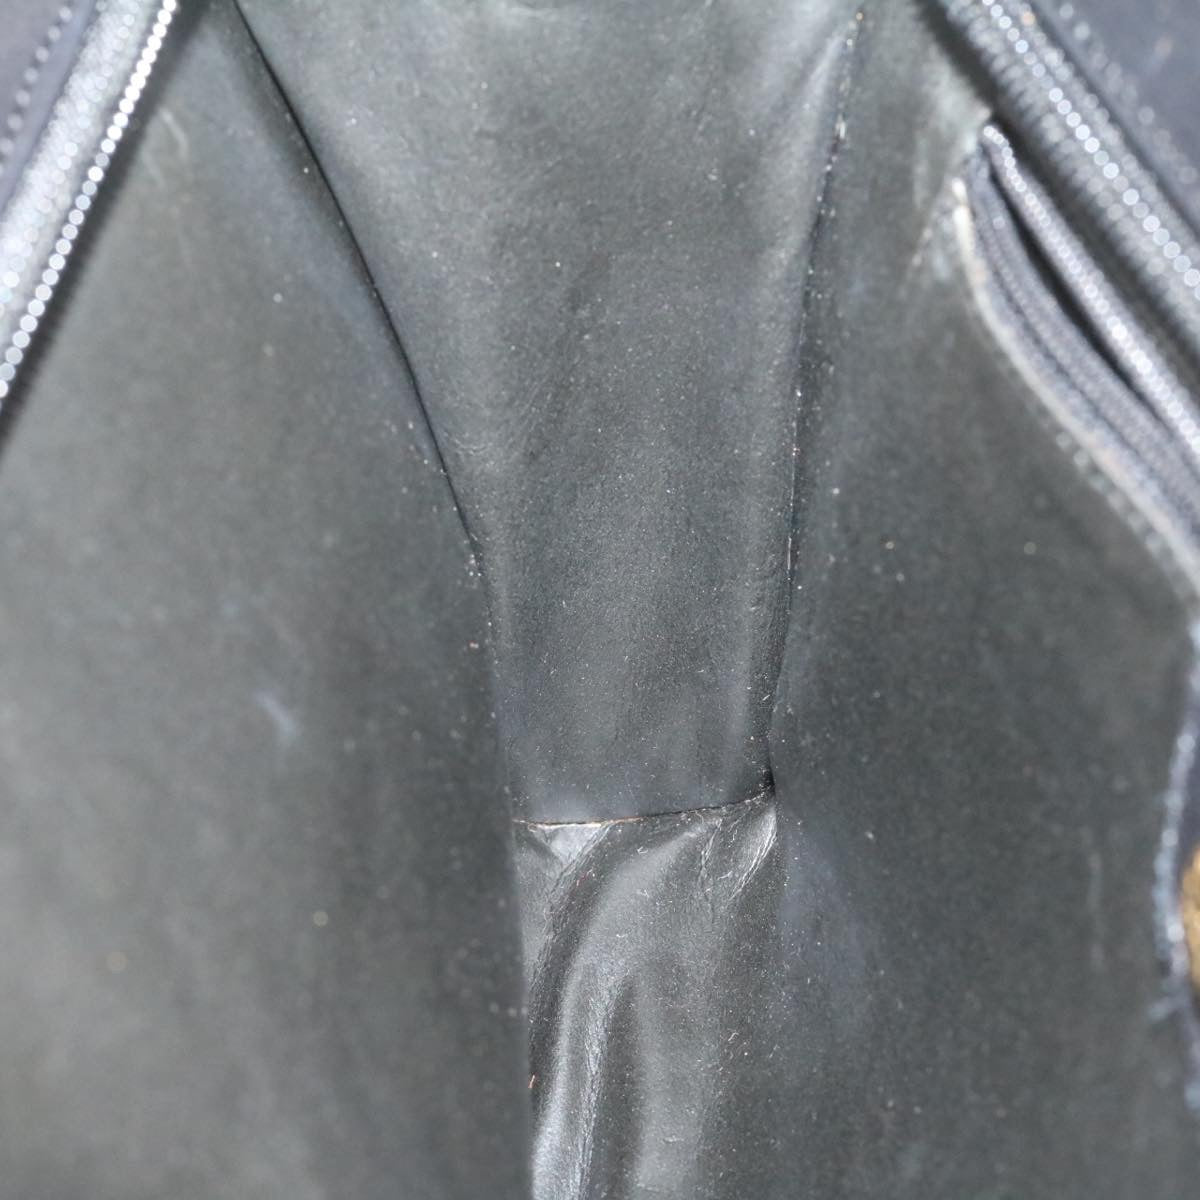 FENDI Clutch Shoulder Bag Leather 2Way Black Auth rd1373